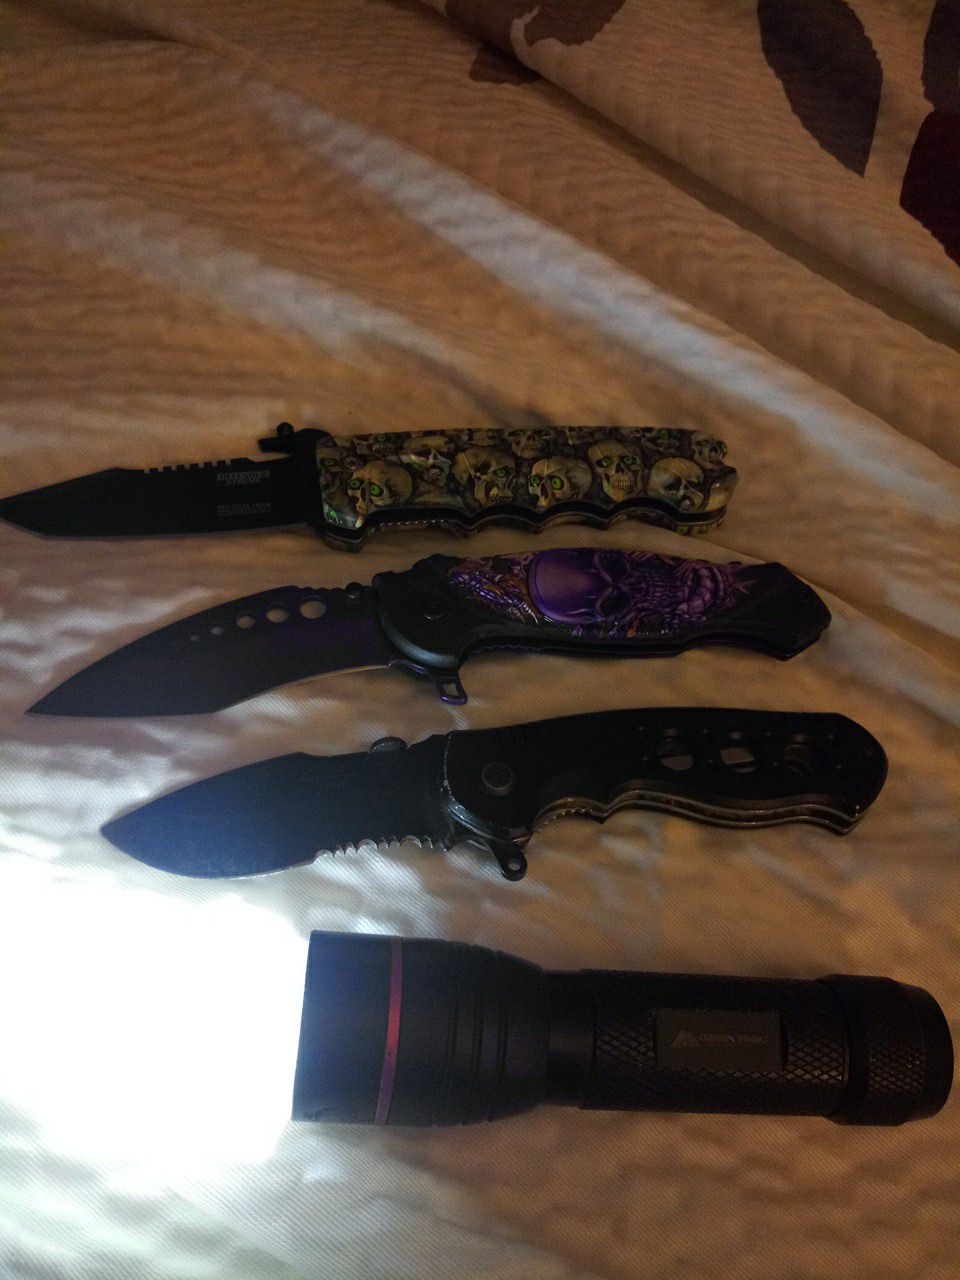 3 knives and flashlight